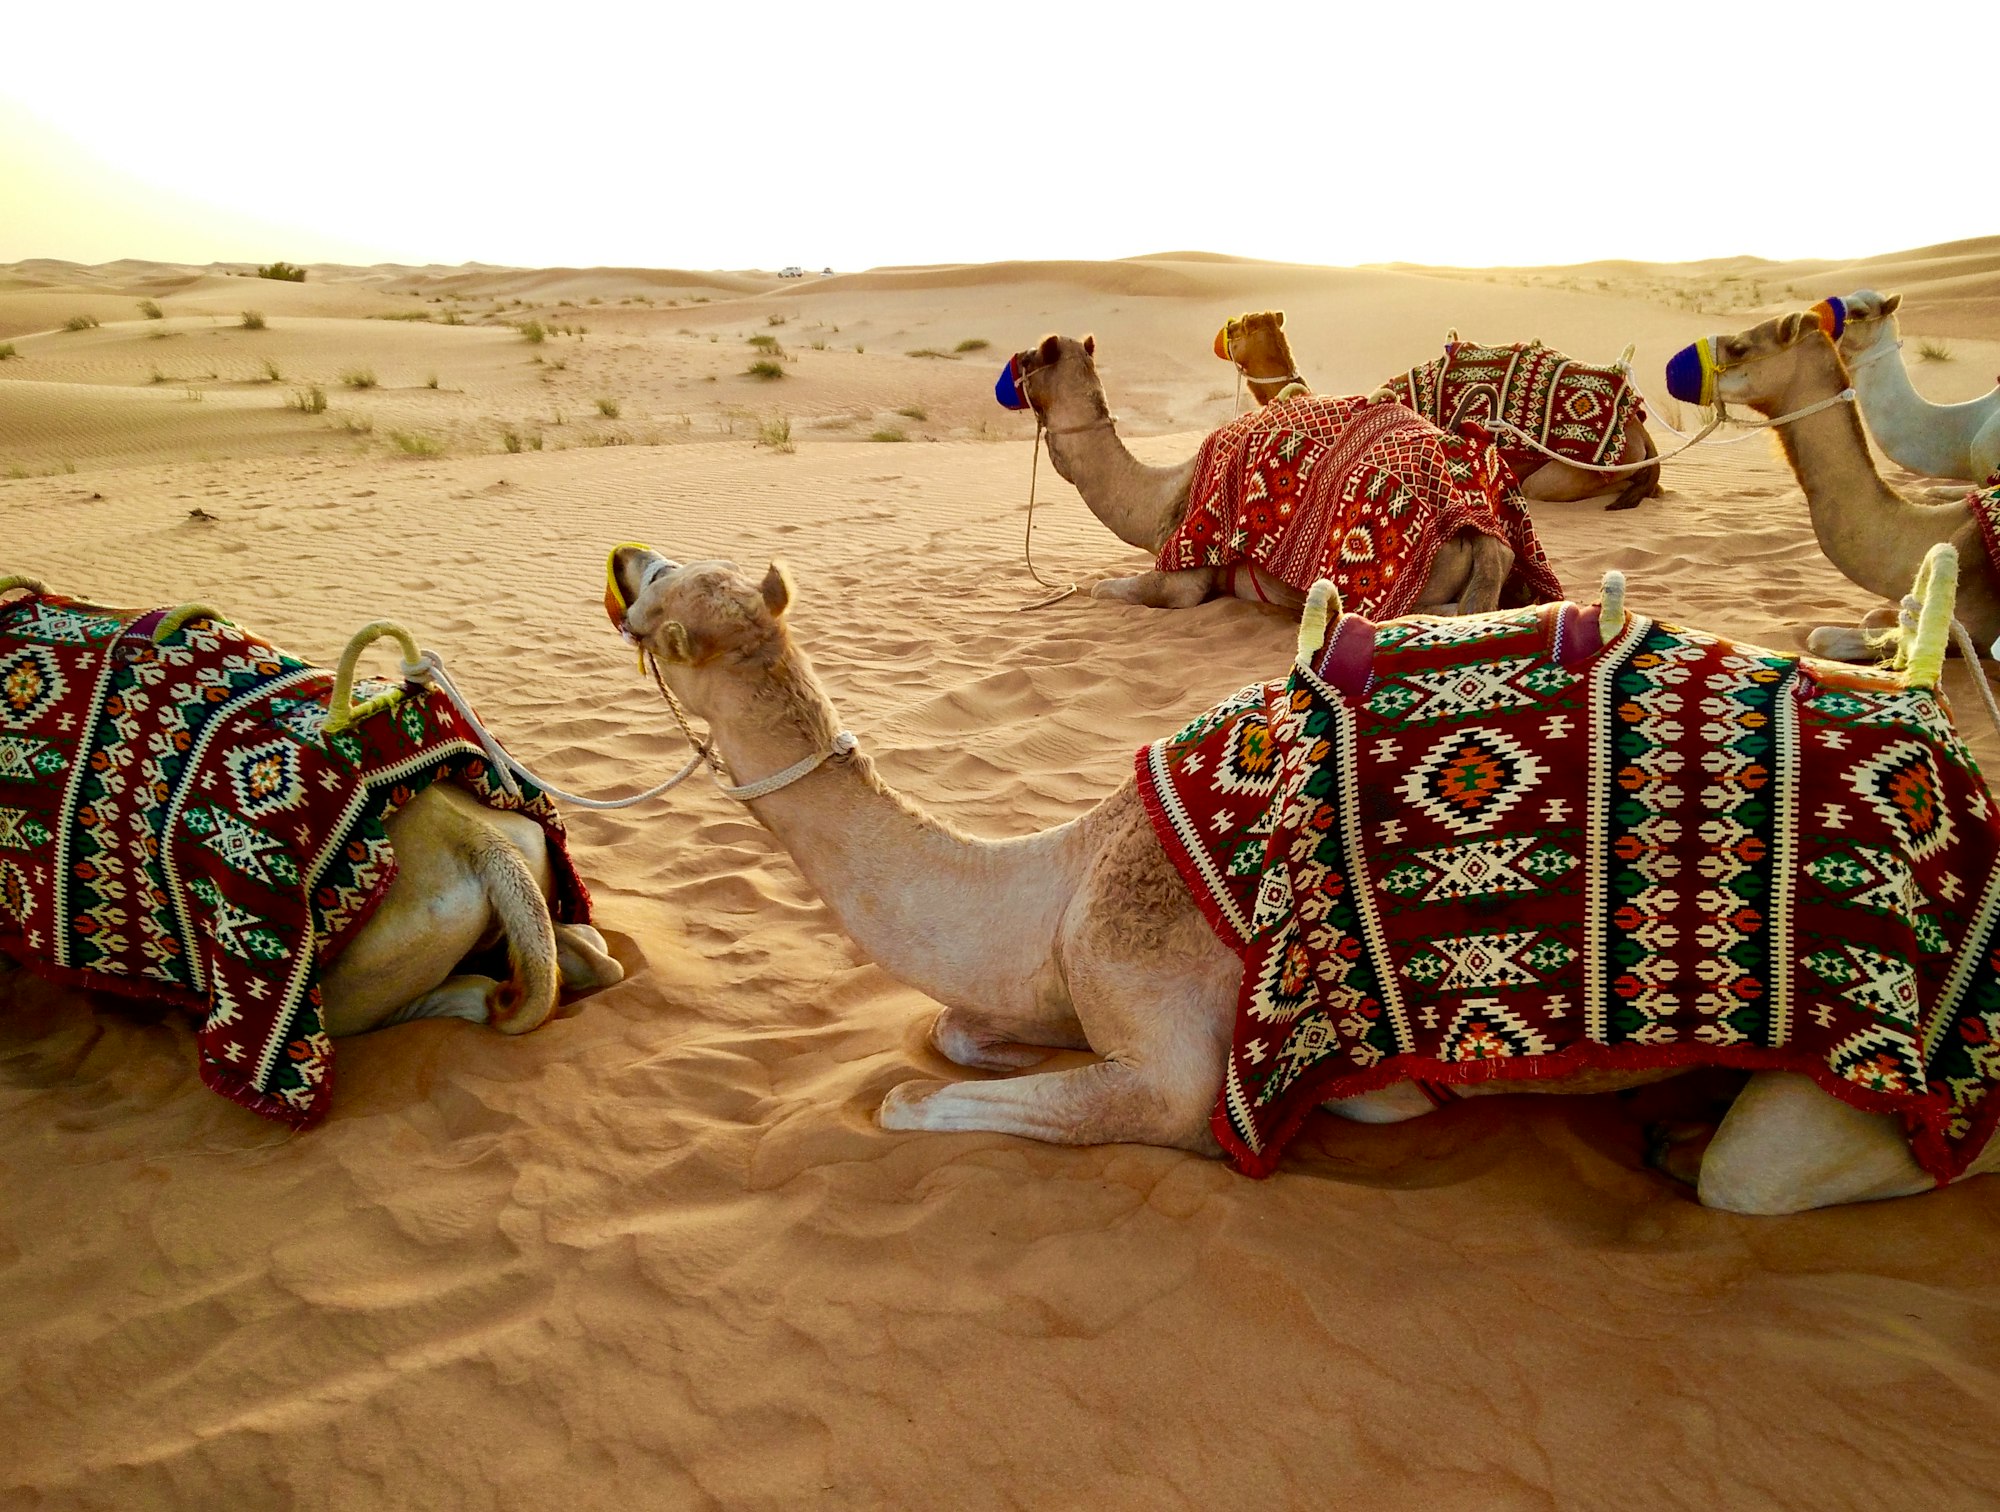 Camels in the desert in Dubai